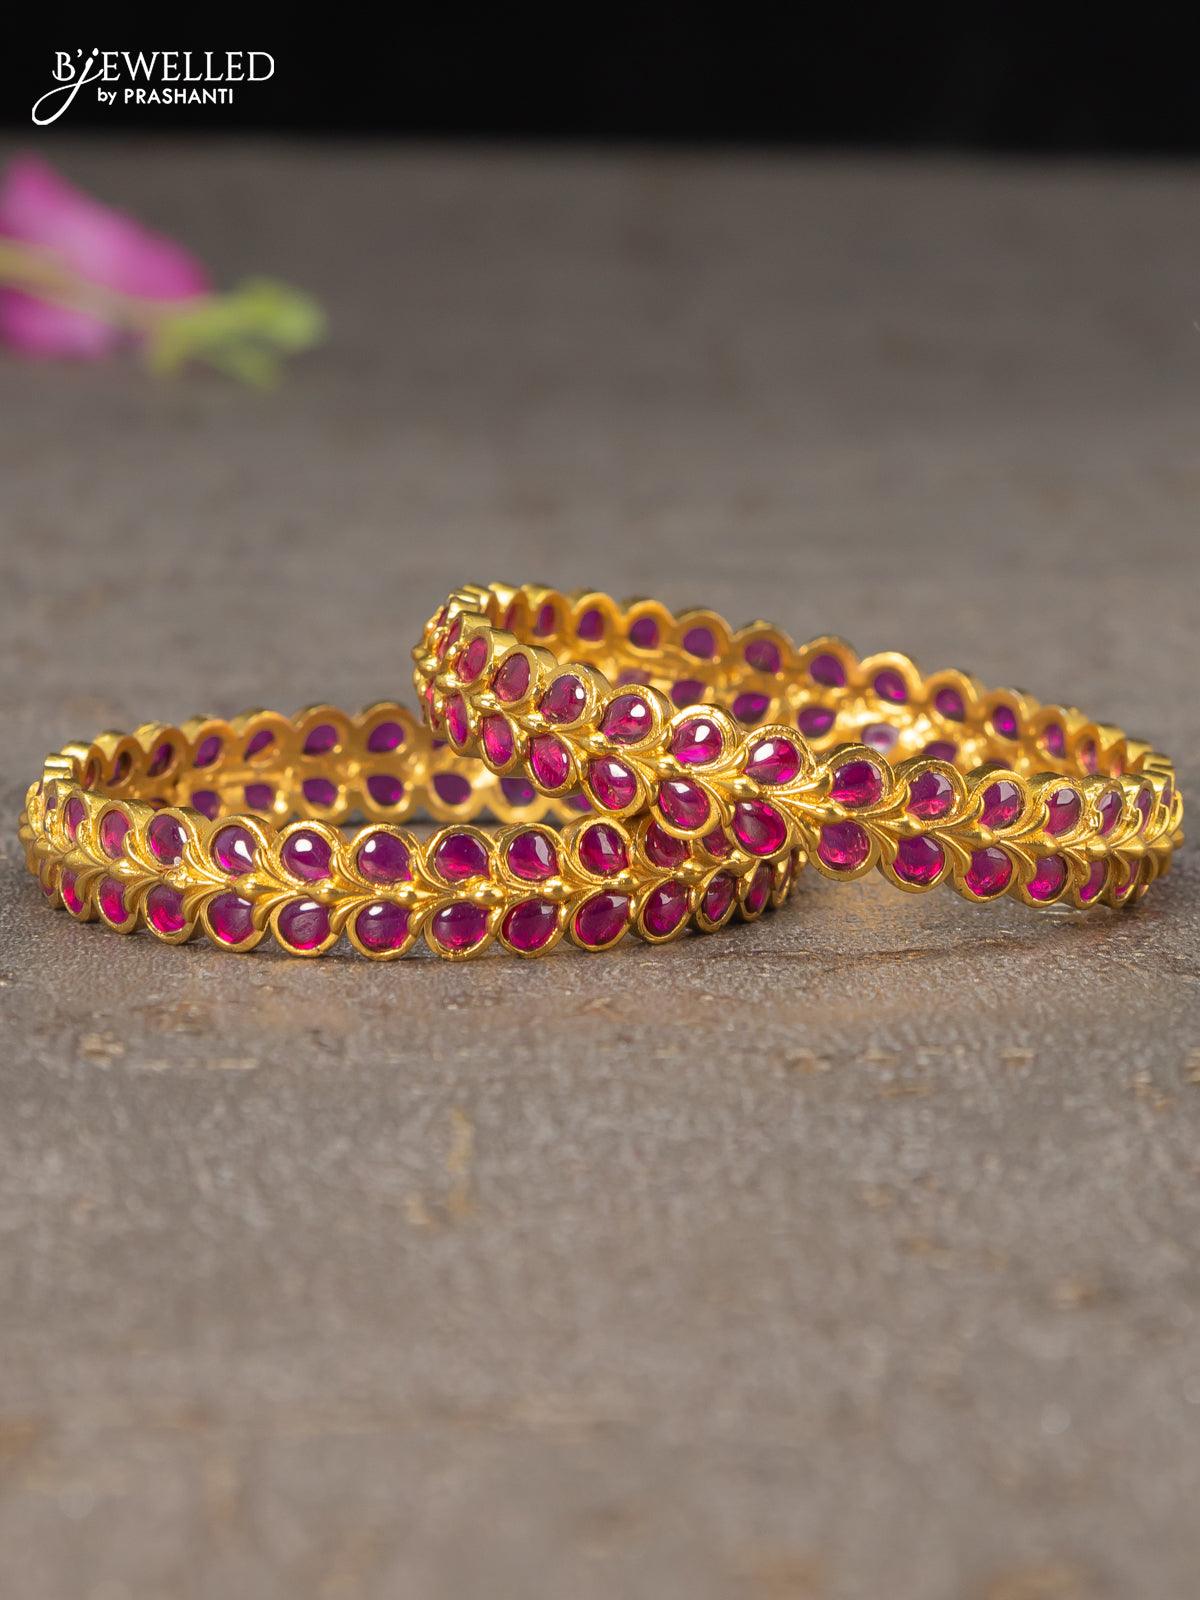 Latest Bracelet Designs | Now Buy Latest Bracelet Online - Niscka